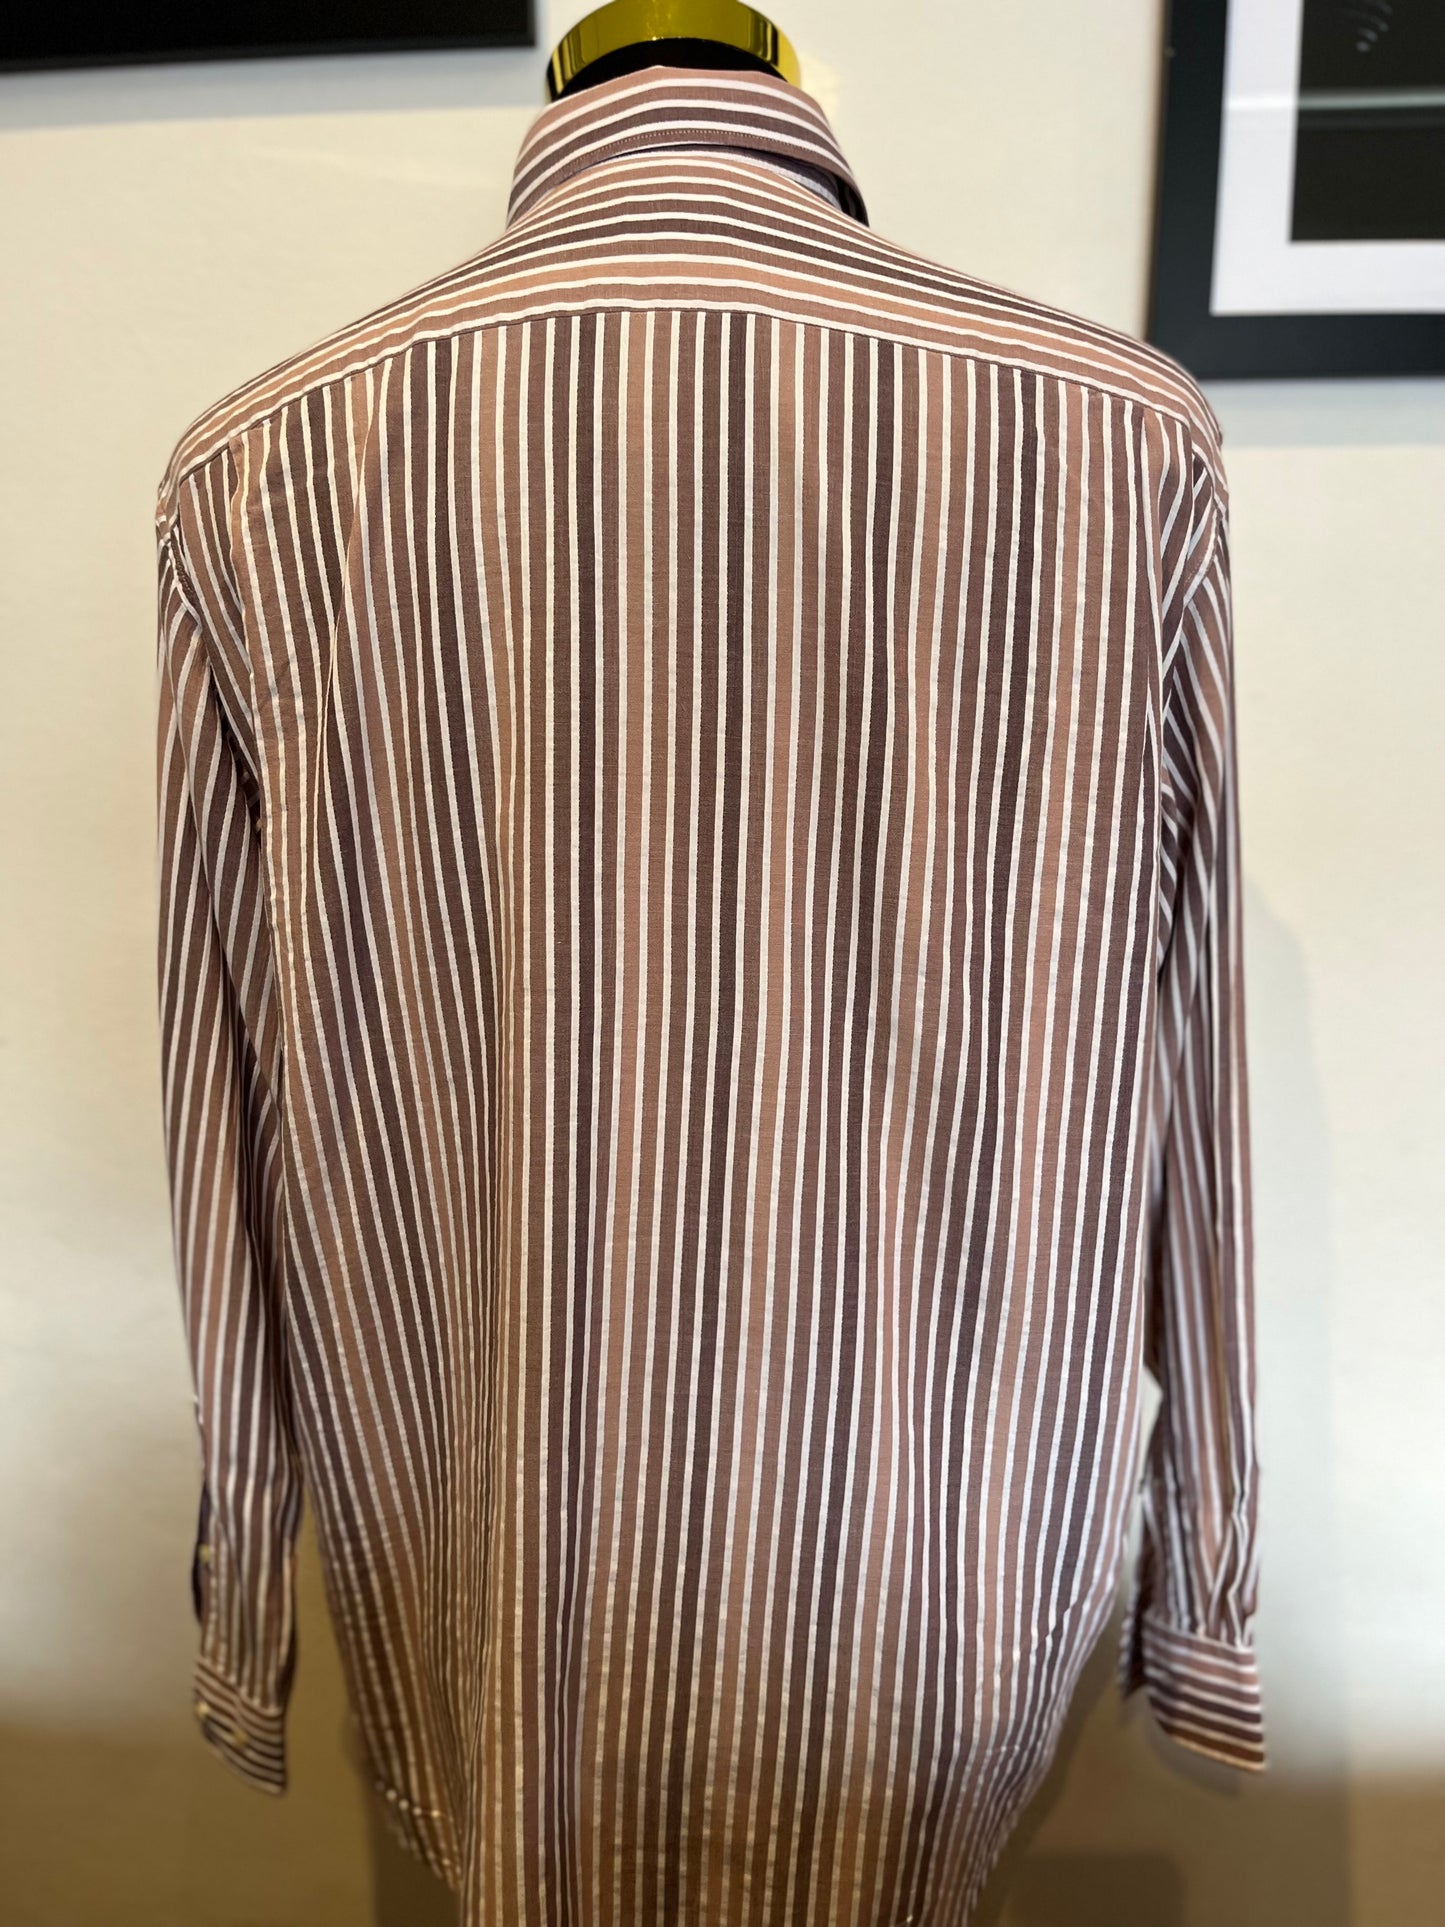 Lacoste 100% Cotton Brown White Stripe Shirt Size 42 Large Button Down Collar